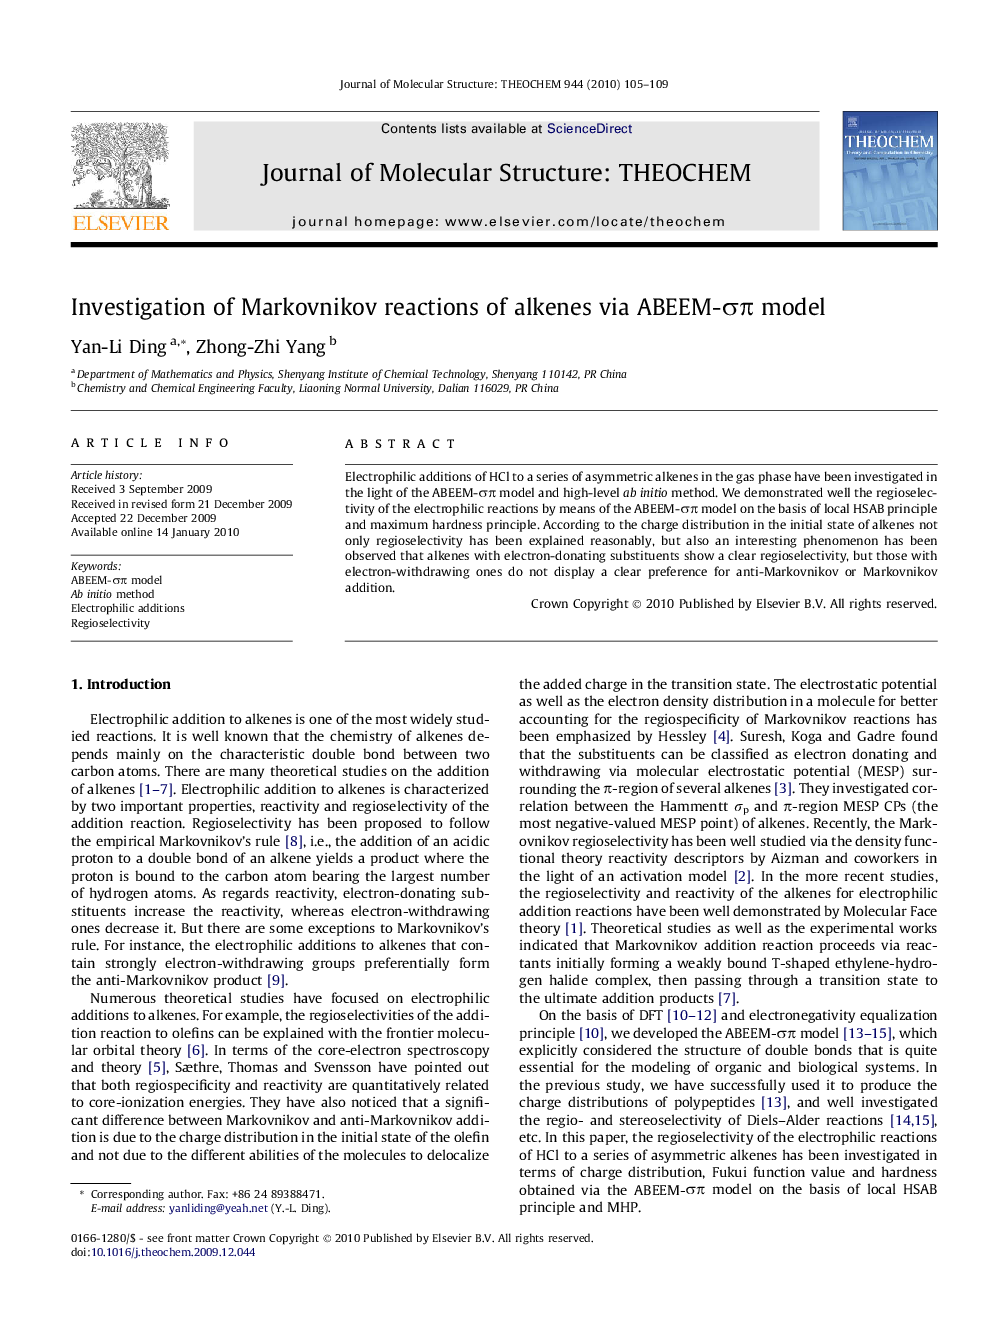 Investigation of Markovnikov reactions of alkenes via ABEEM-ÏÏ model